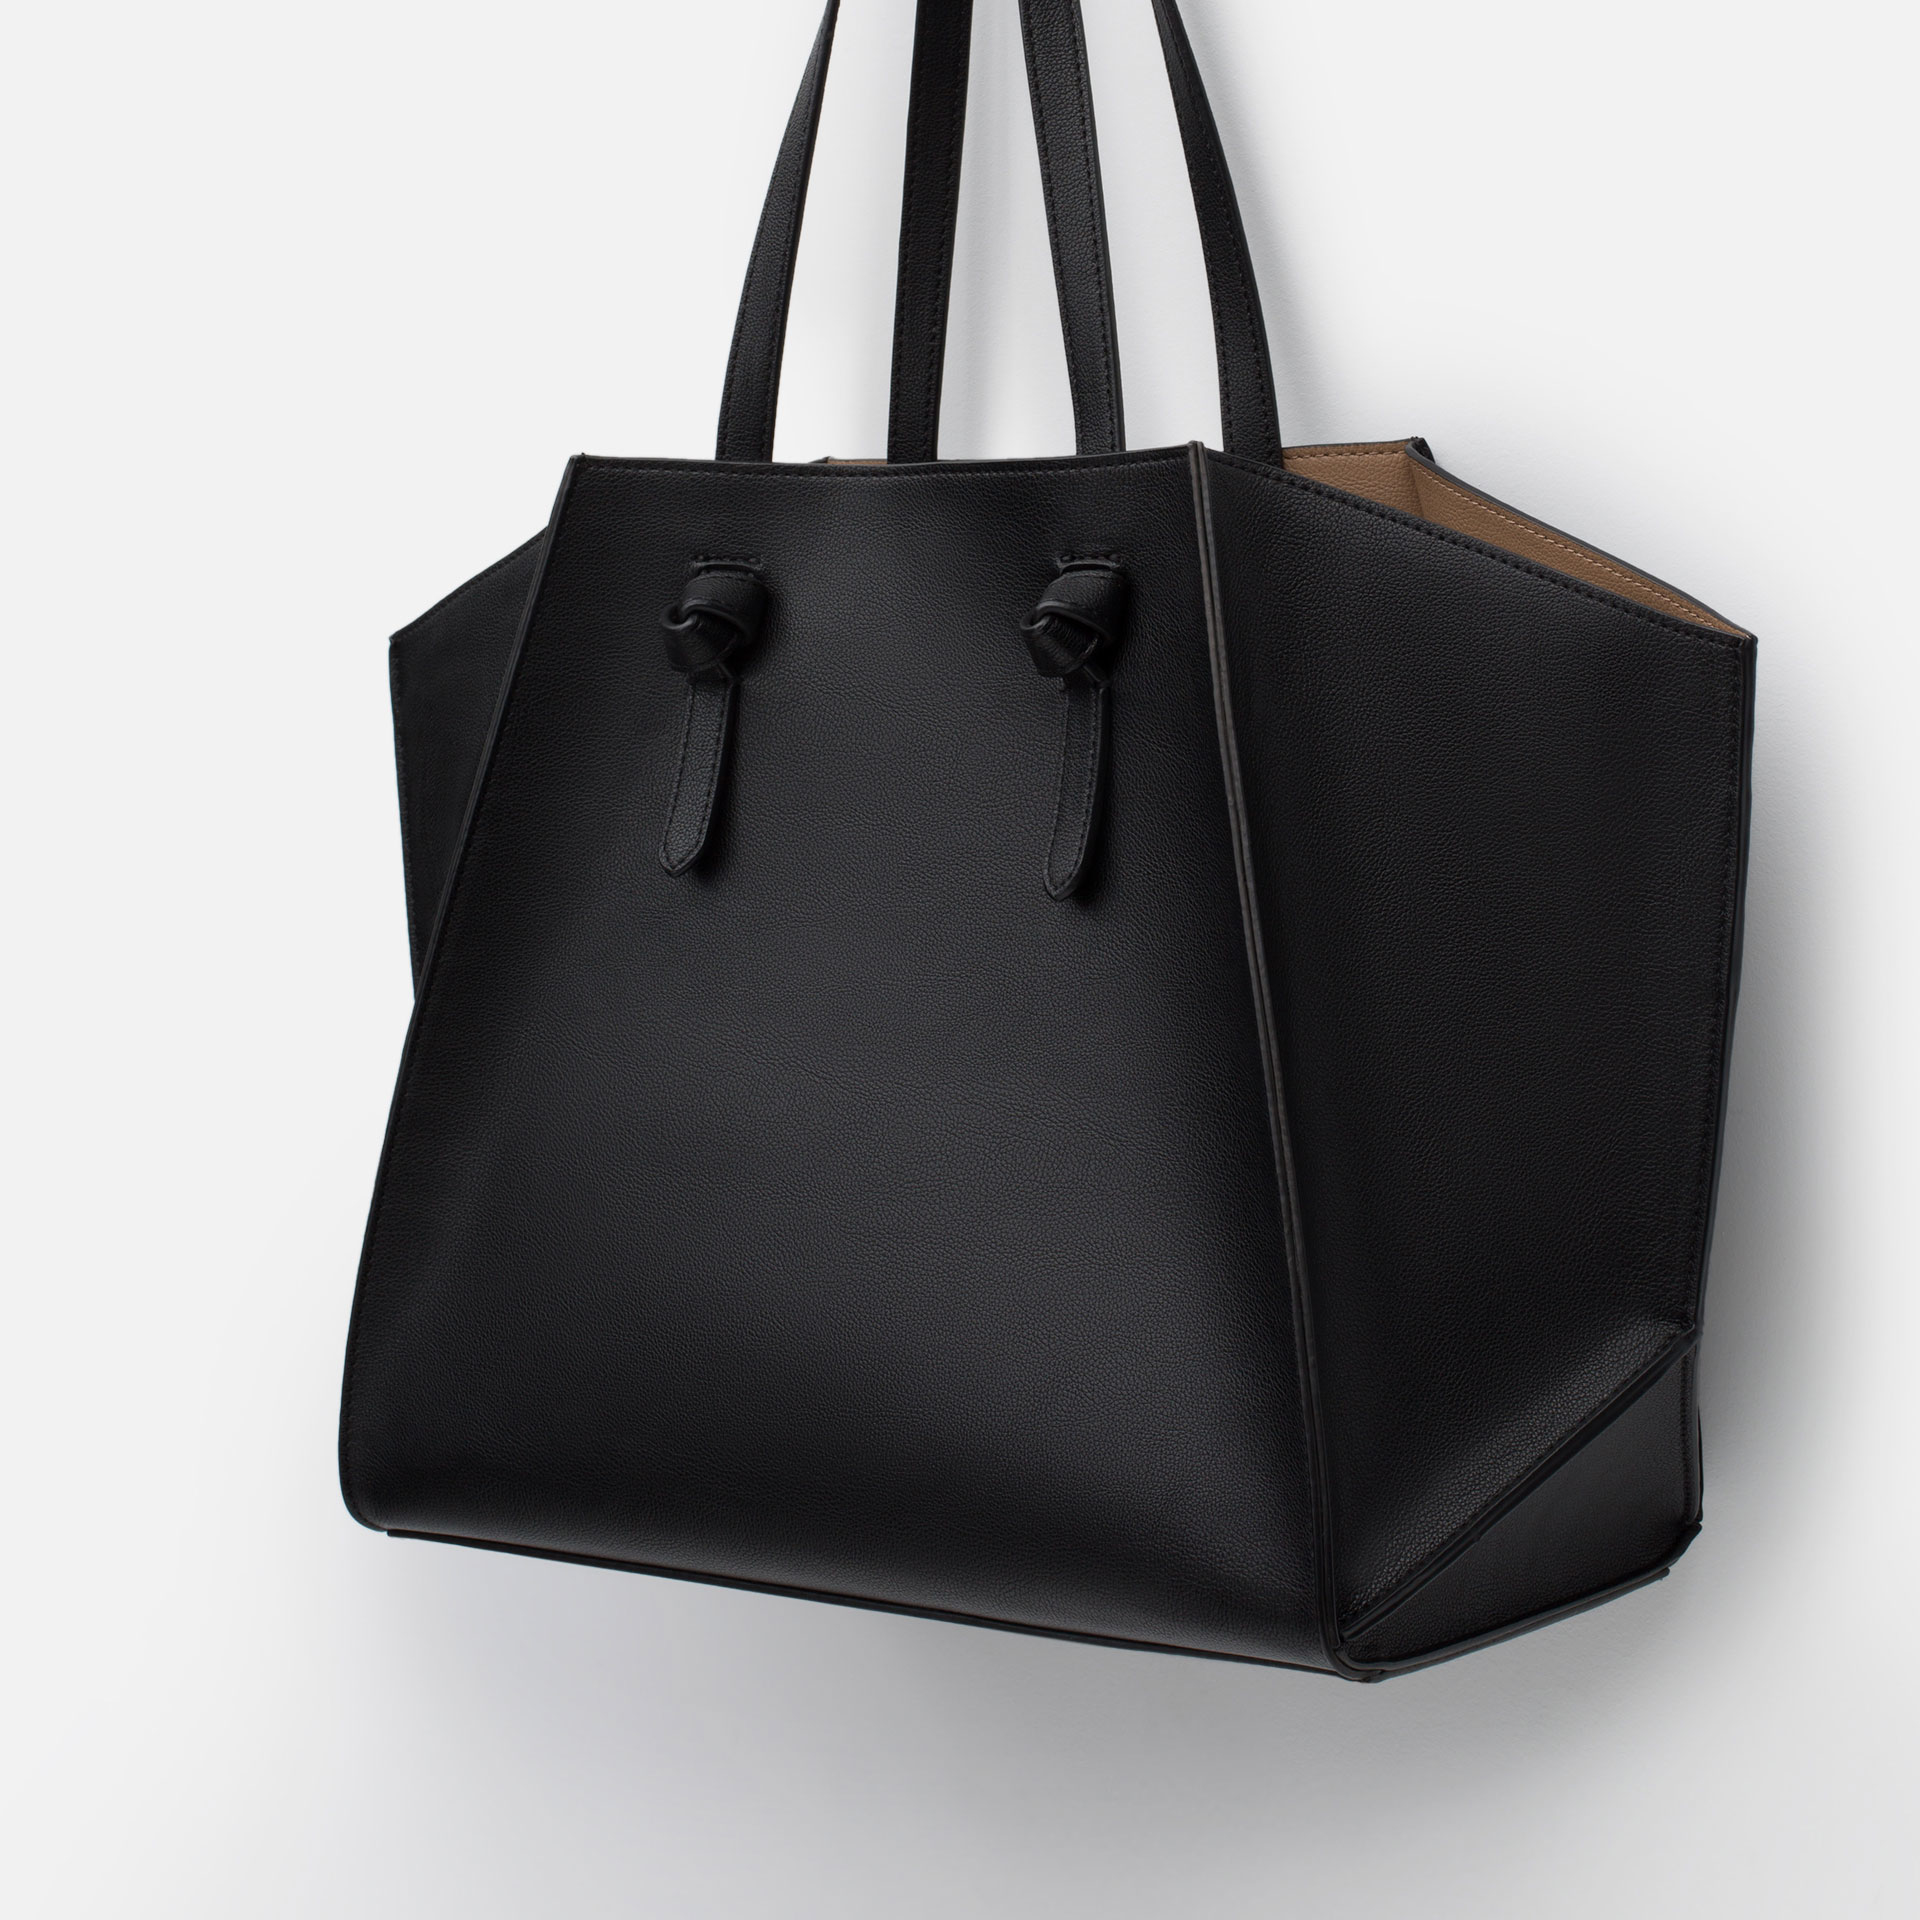 Large Black Handbags Zara | The Art of Mike Mignola